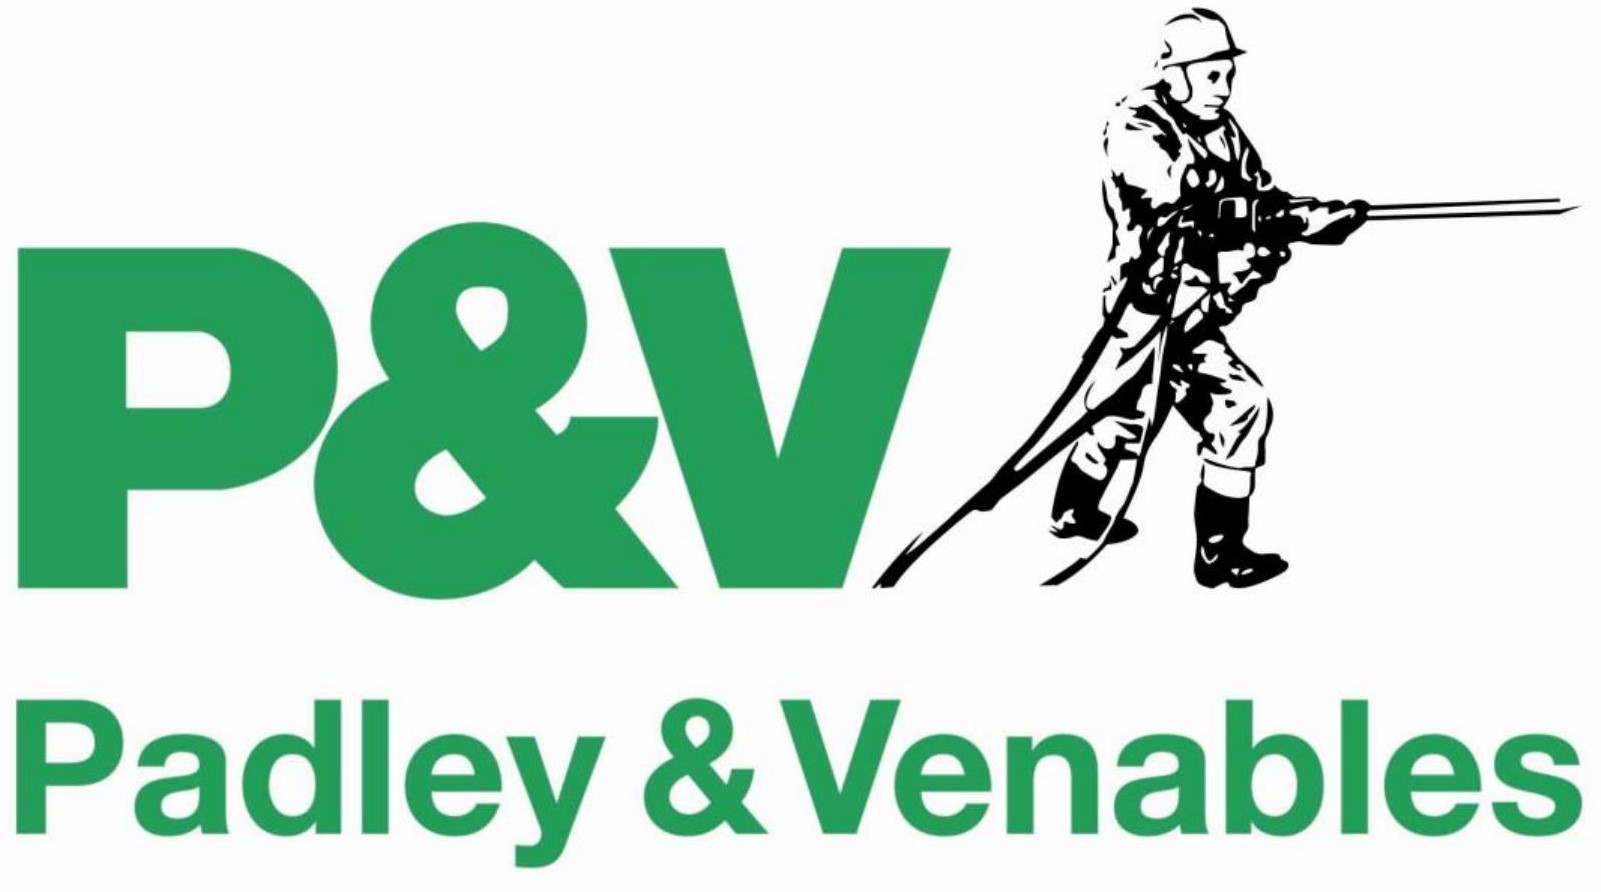 P&V logo green